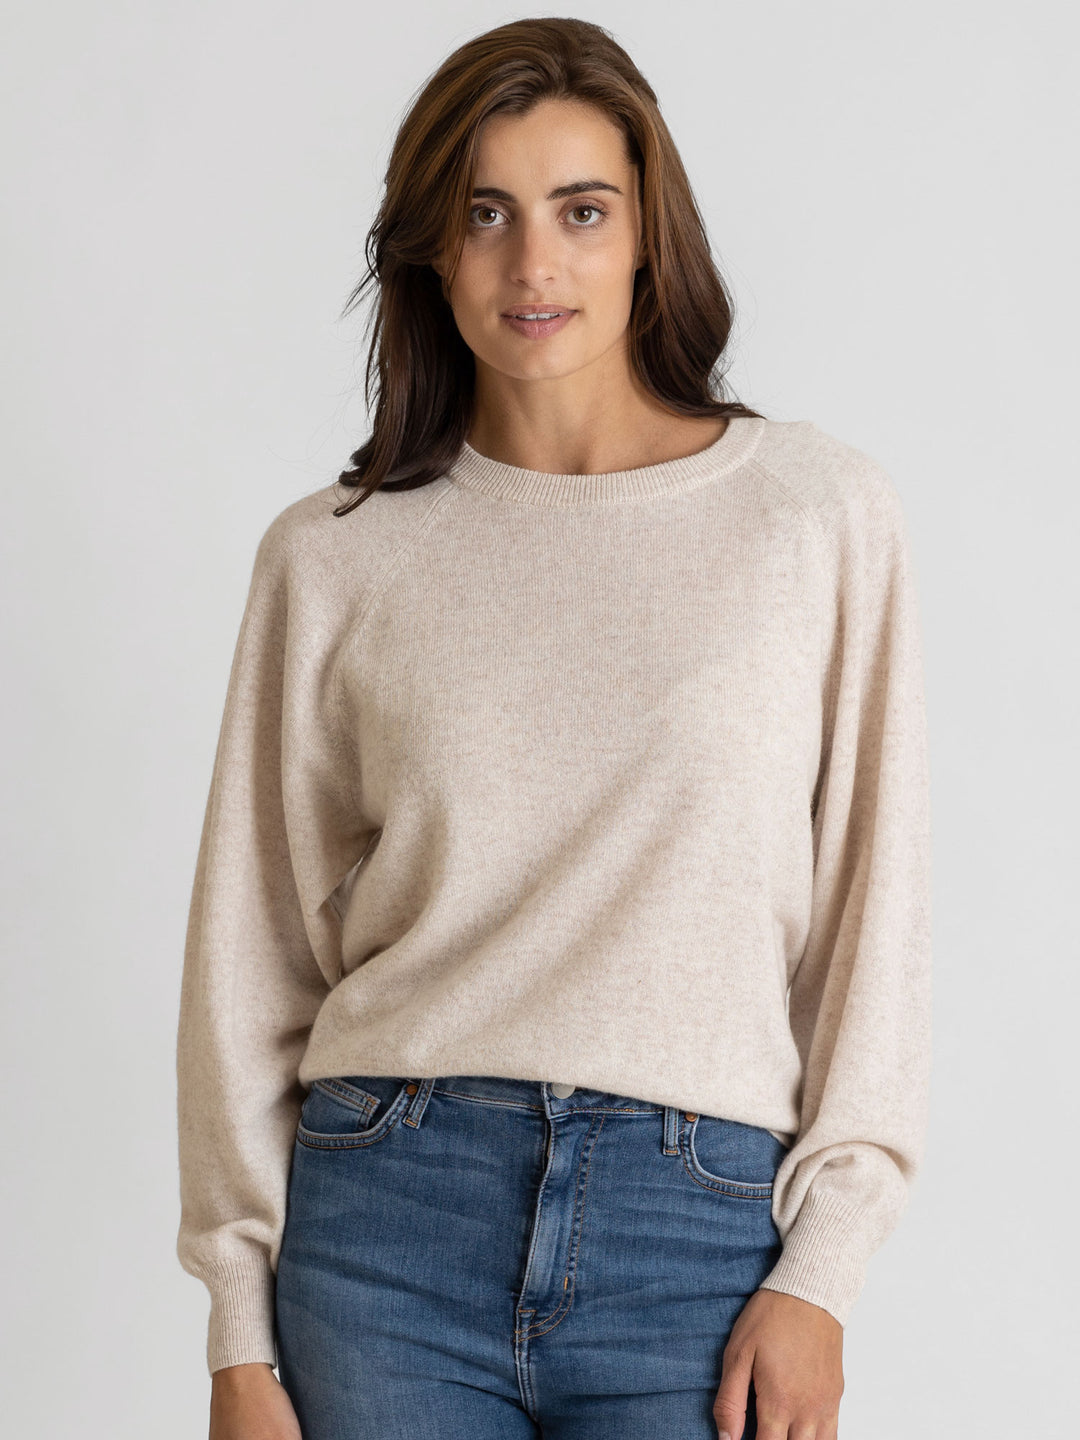 beige cashmere sweater embla, o-neck, long sleeved,, 100% cashmere from kashmina, norwegian design